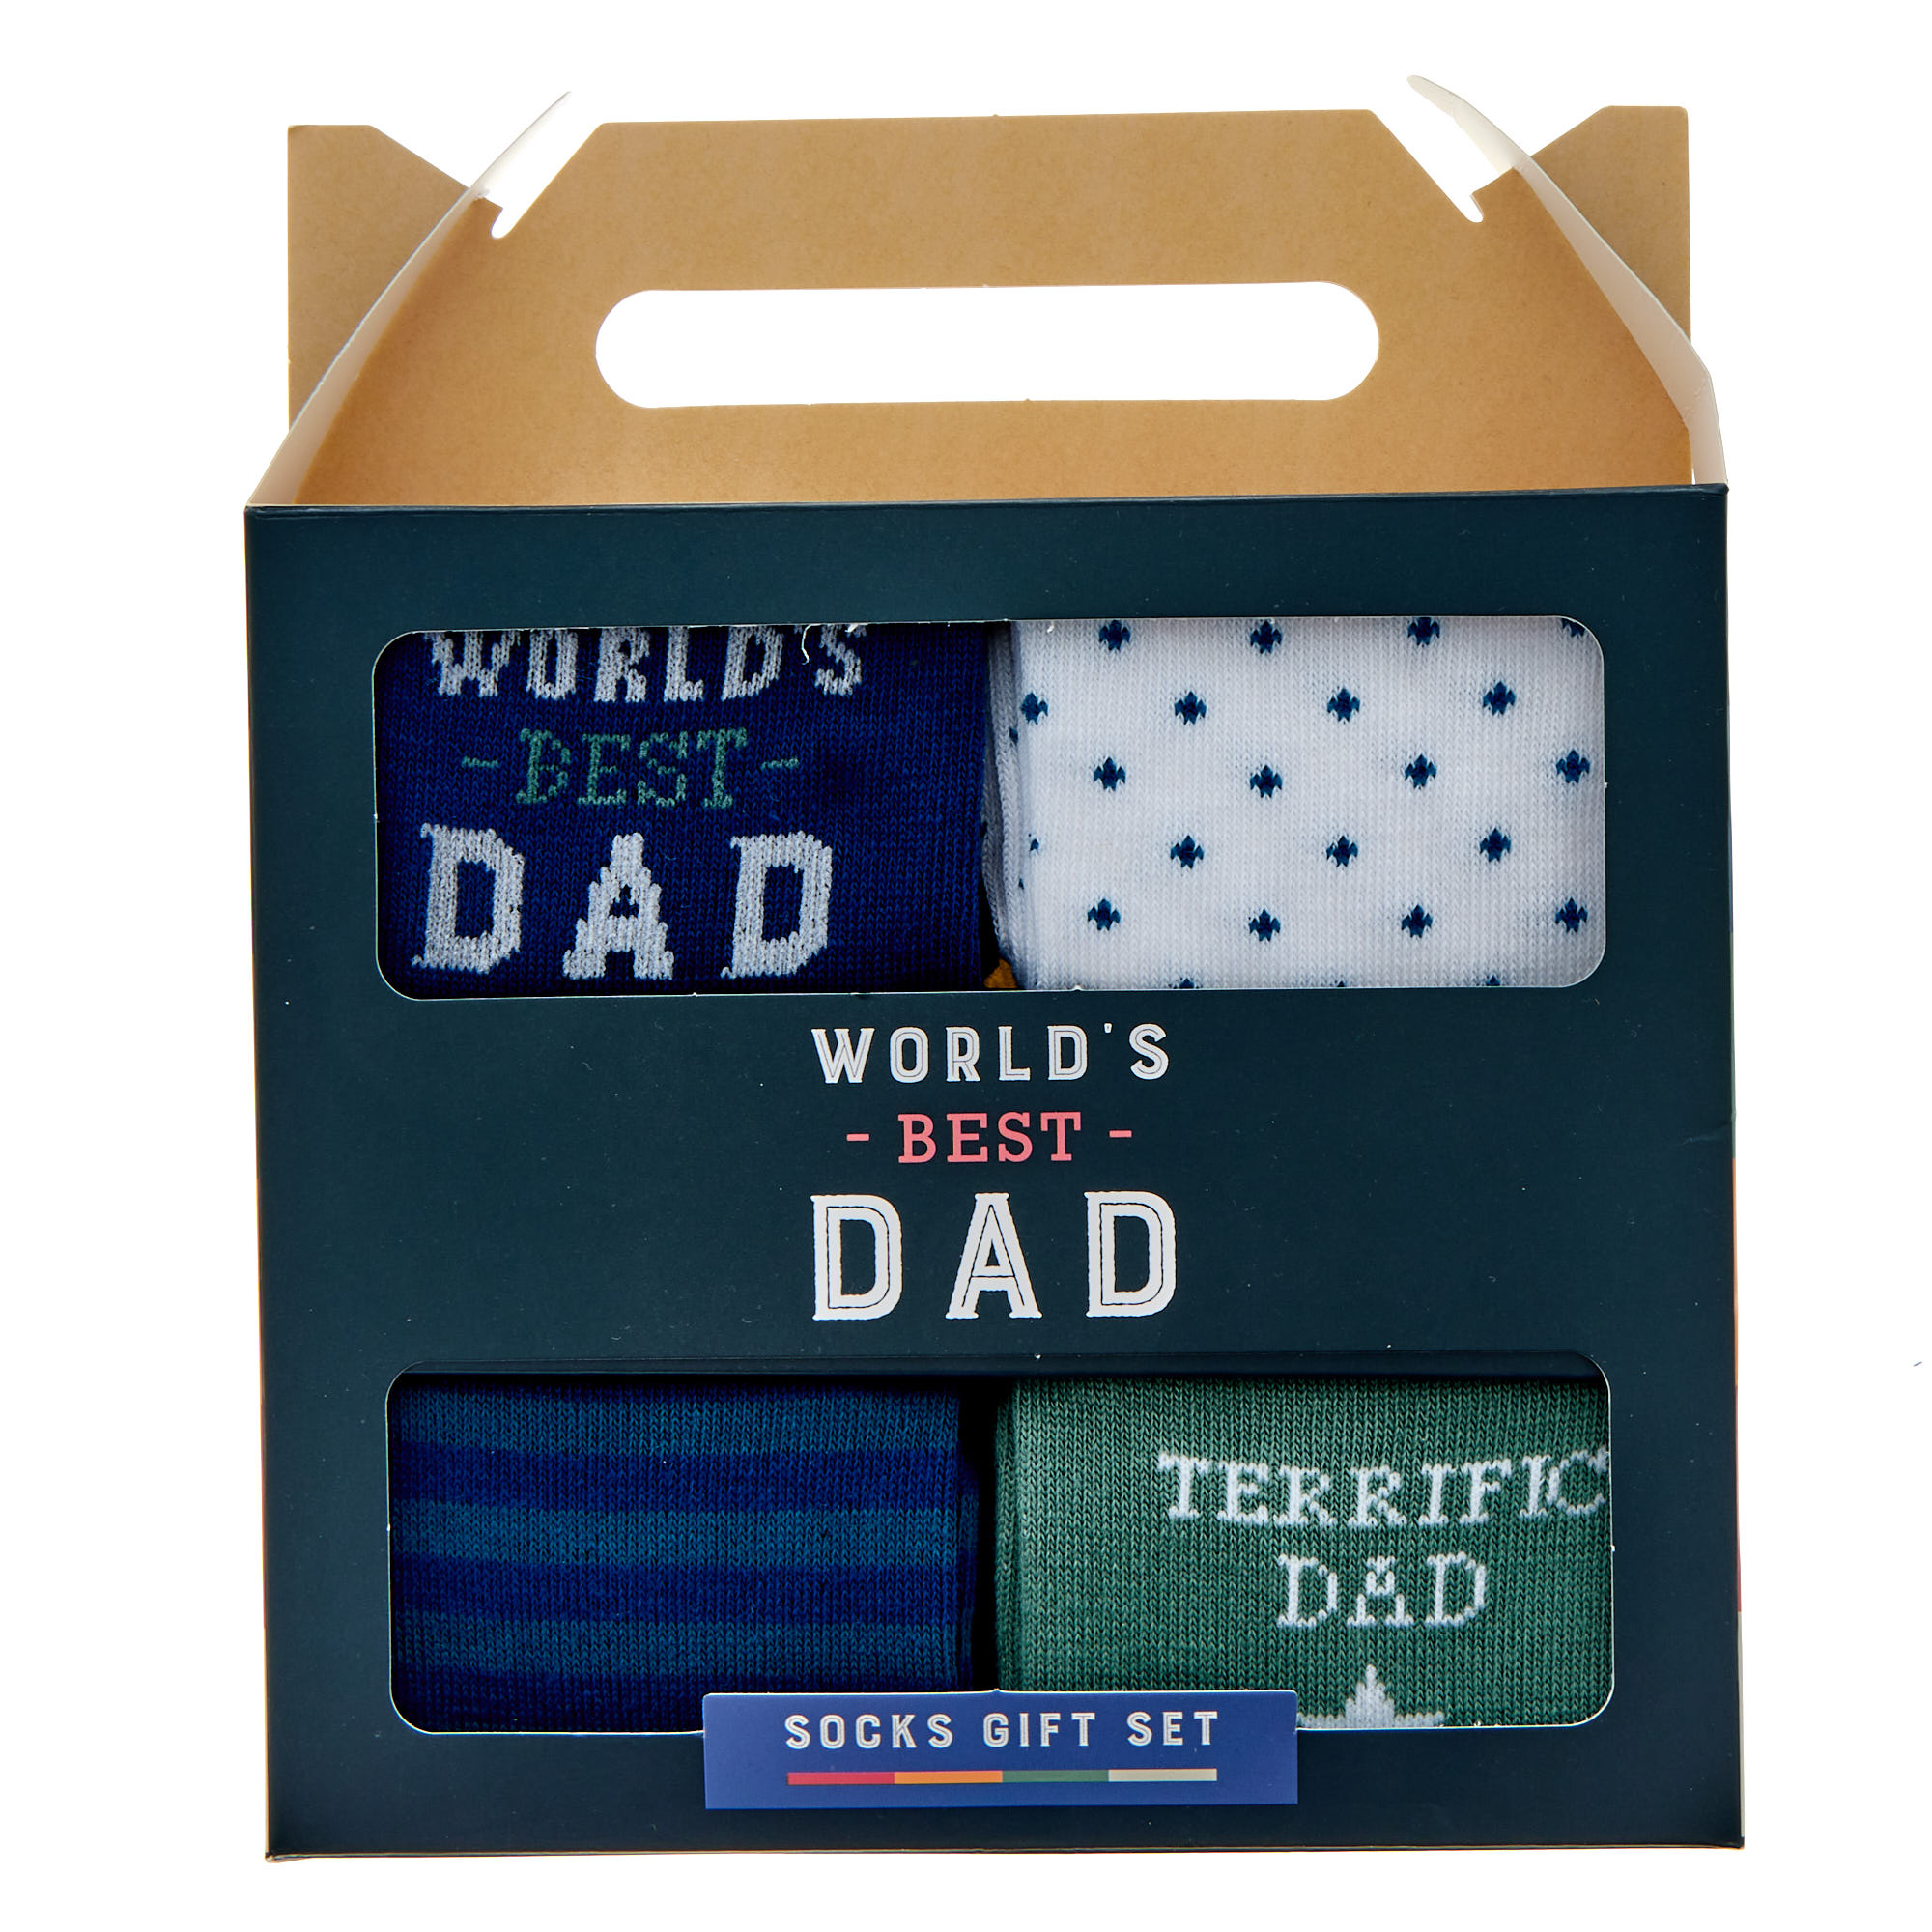 World's Best Dad Socks Gift Set - 4 Pairs